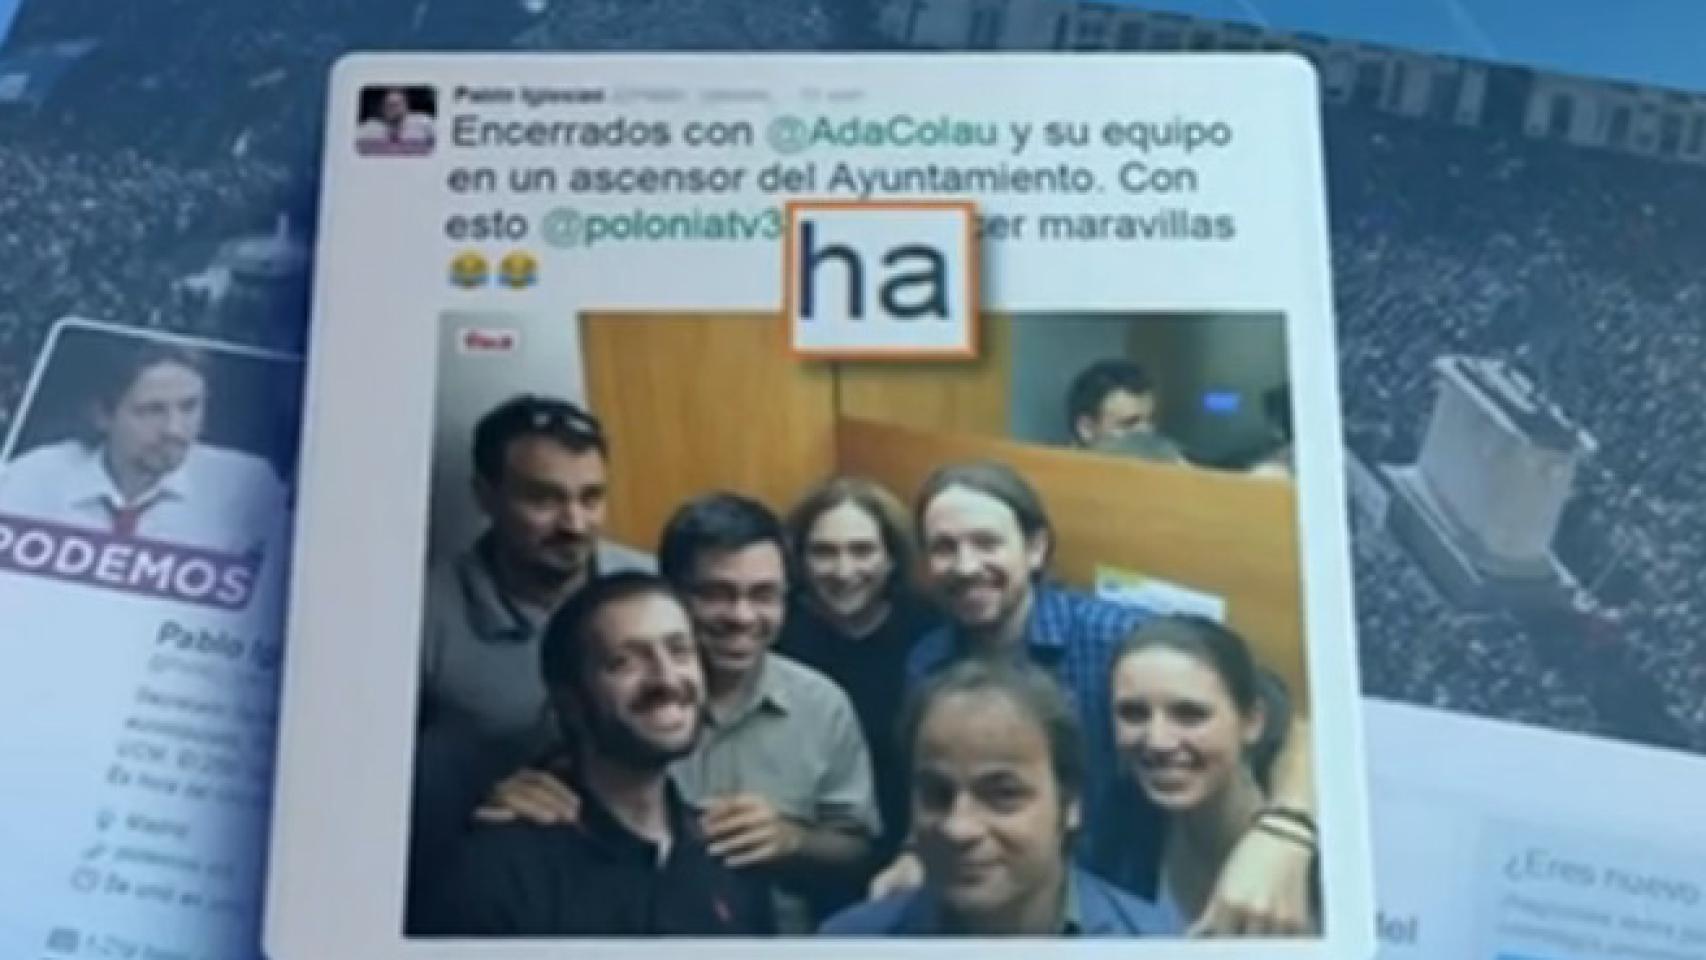 El Telediario de TVE resalta una errata de Pablo Iglesias en Twitter